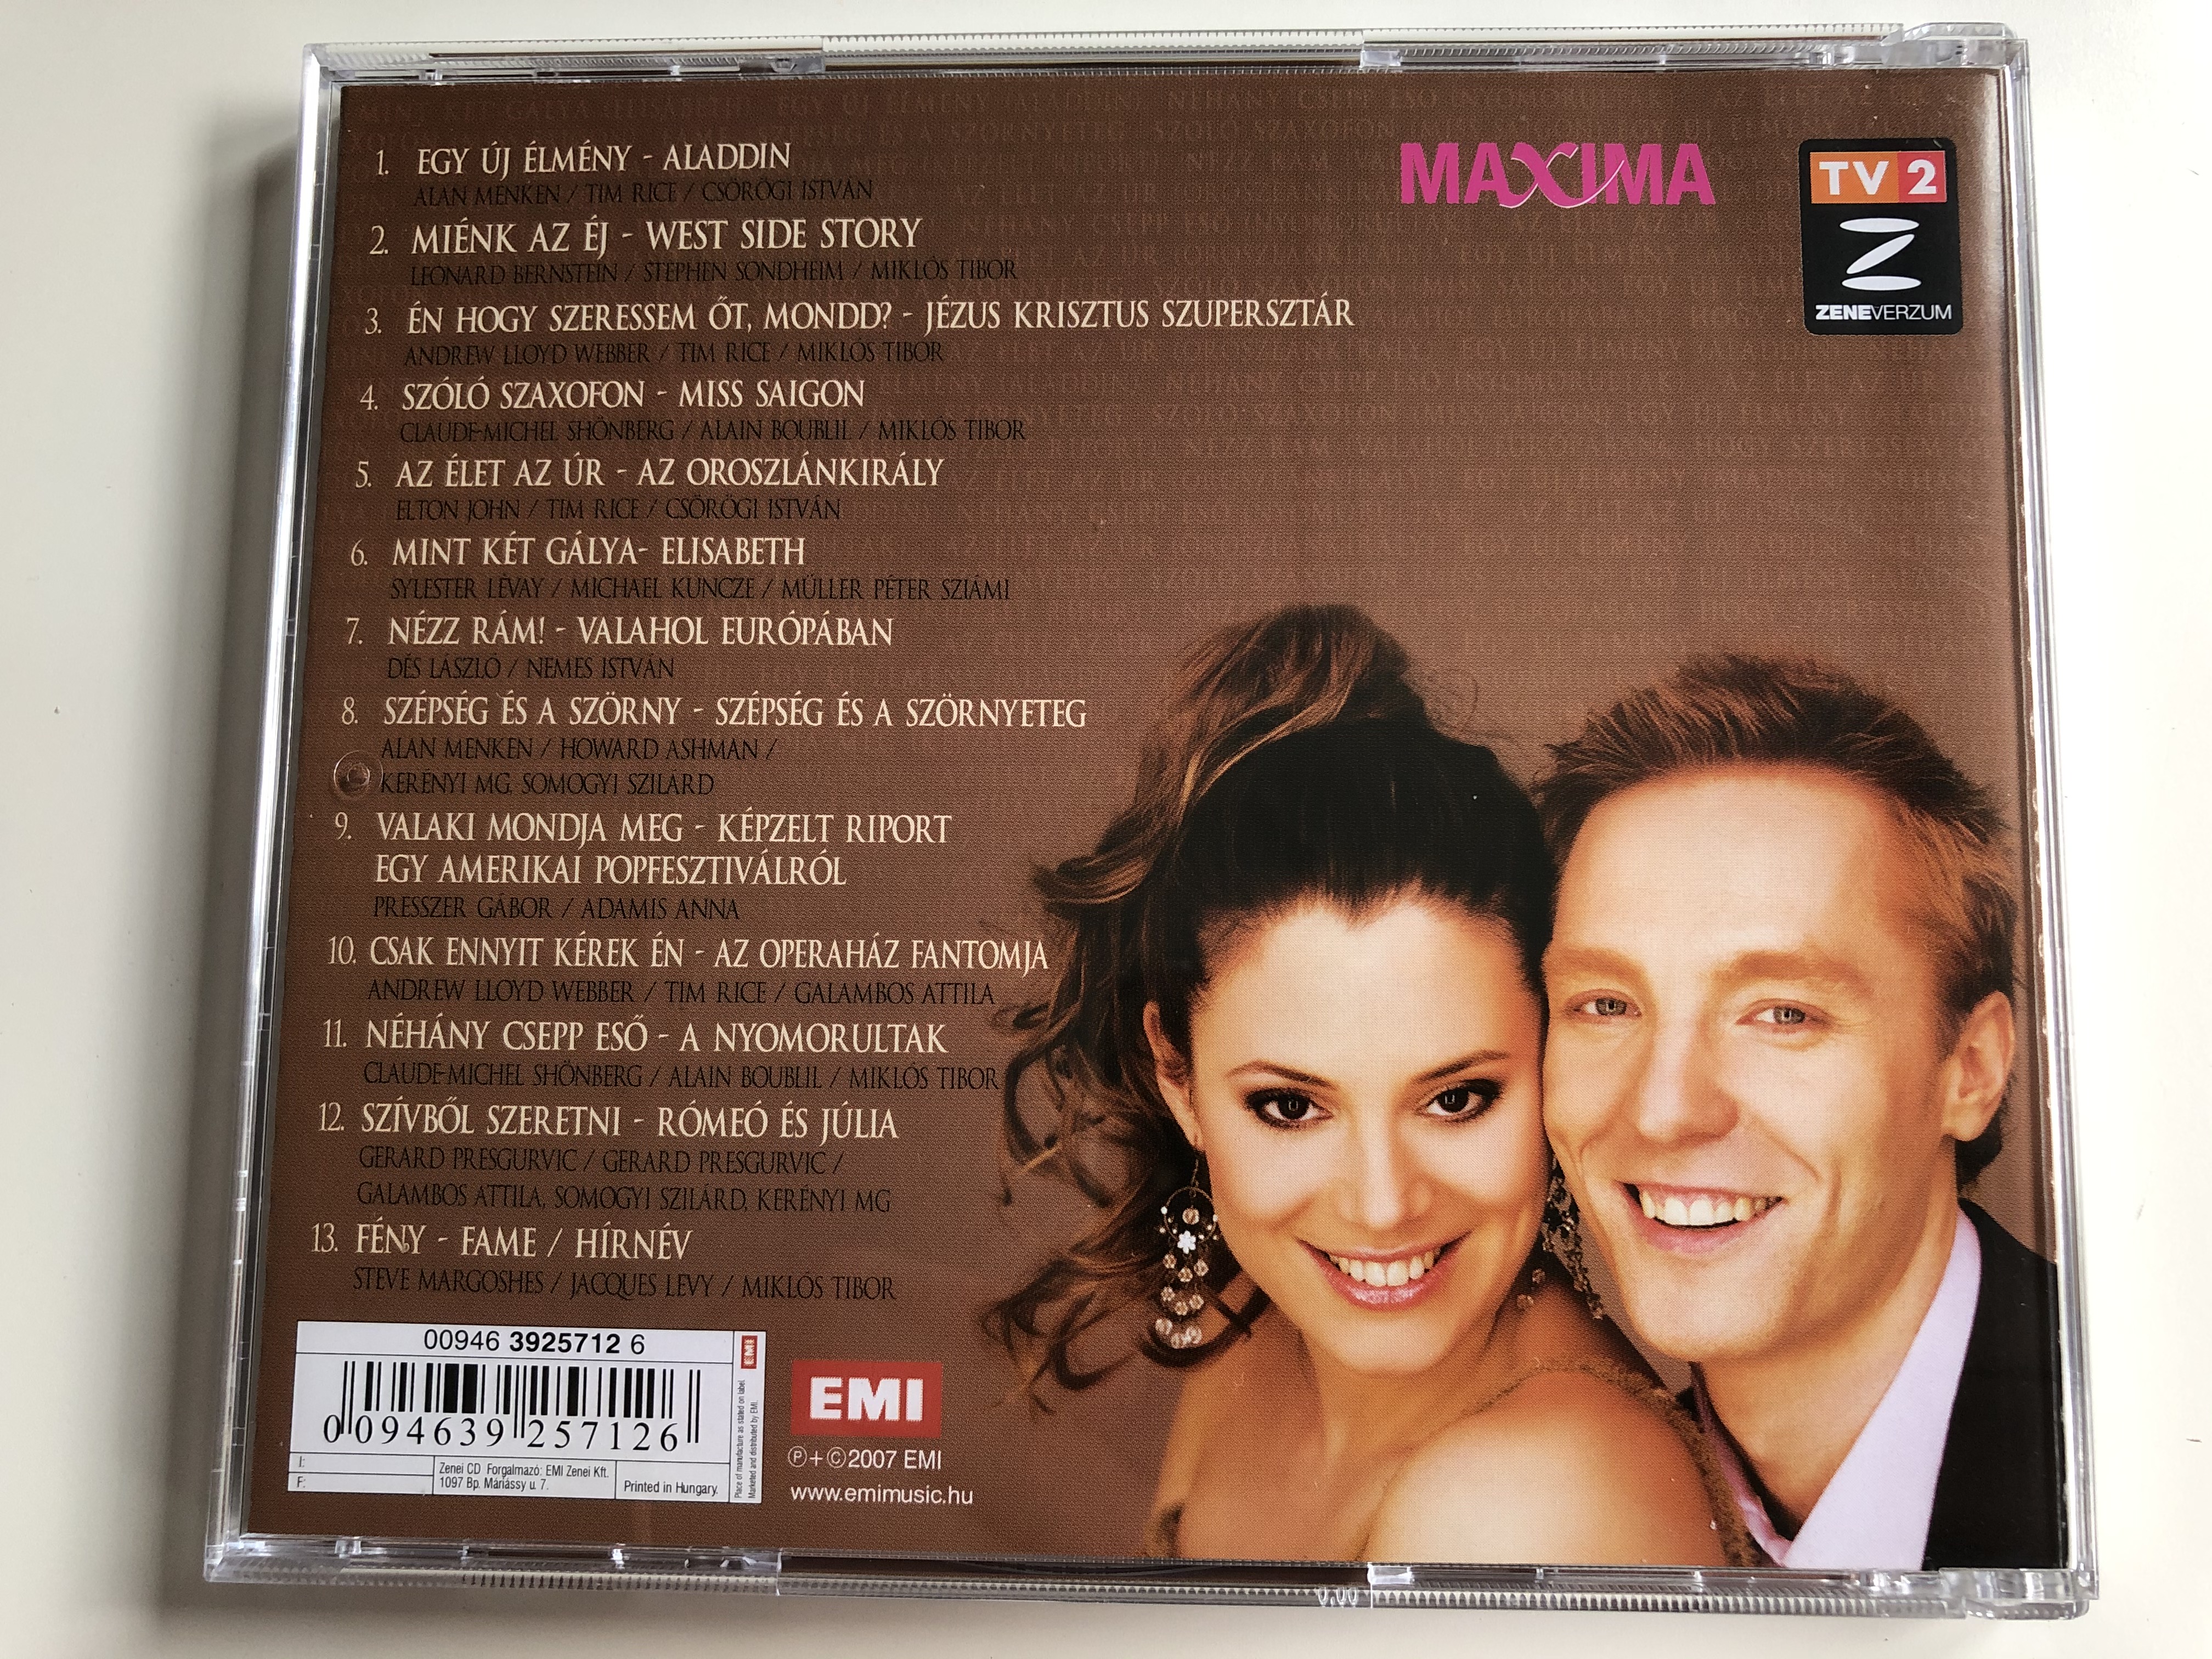 bereczki-zolt-n-szinet-r-d-ra-musical-duett-emi-audio-cd-2007-392571-2-3-.jpg